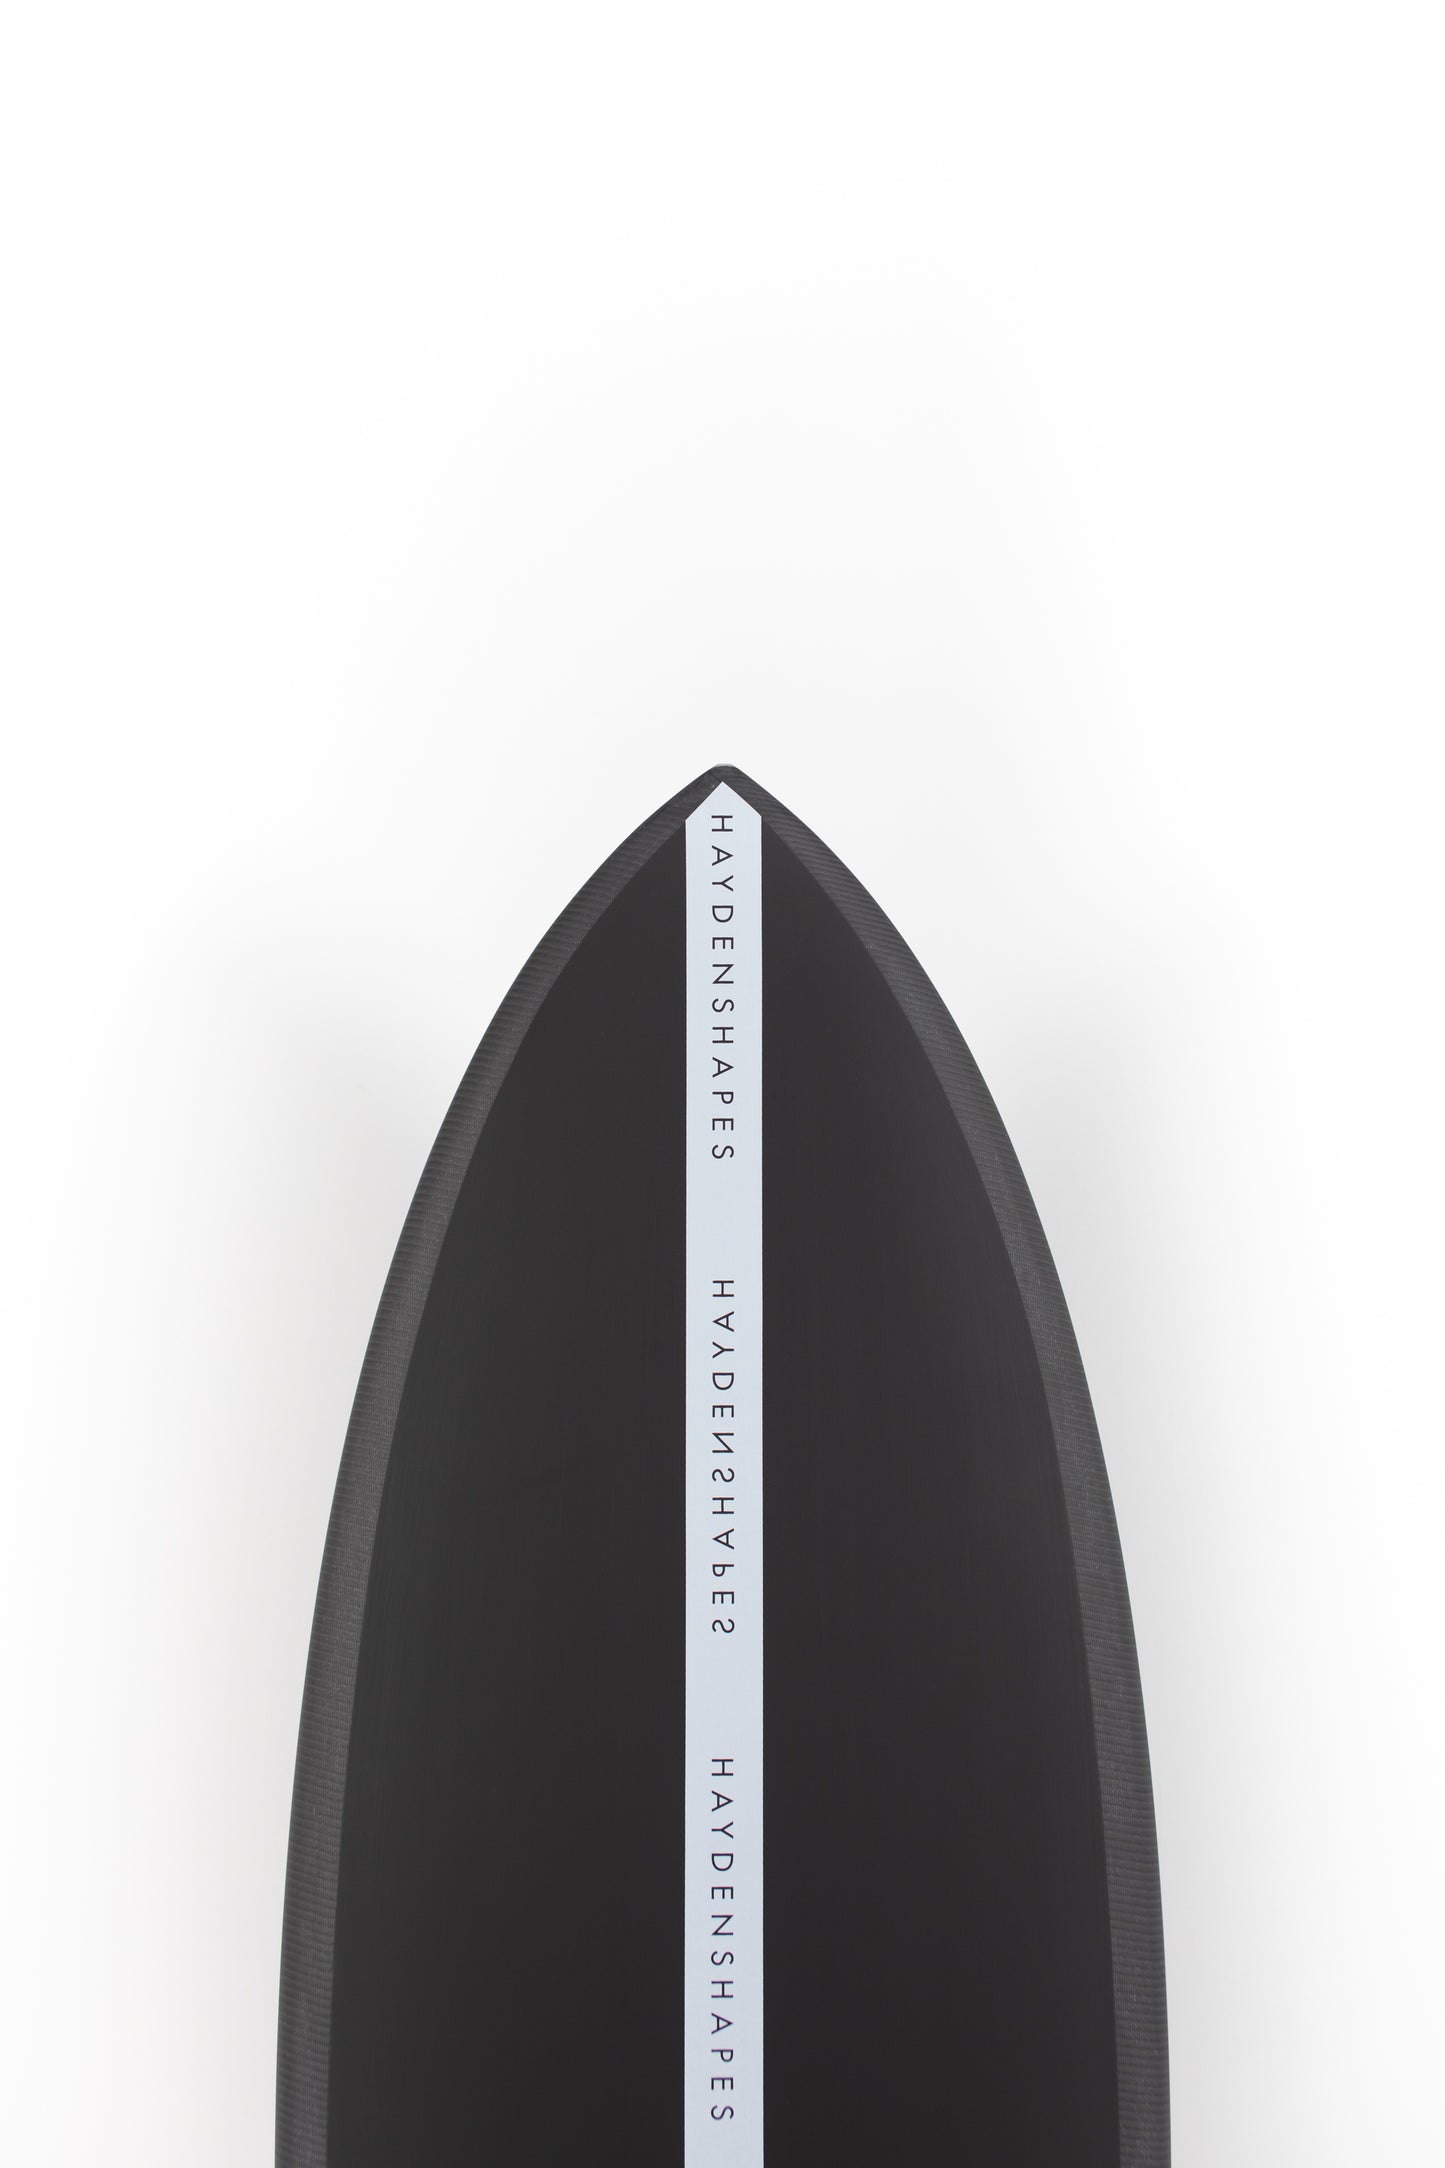 Pukas Surf Shop - HaydenShapes Surfboard - HYPTO KRYPTO FUTUREFLEX - 5'10" x 20 1/4" x 2 5/8" - 33.73L